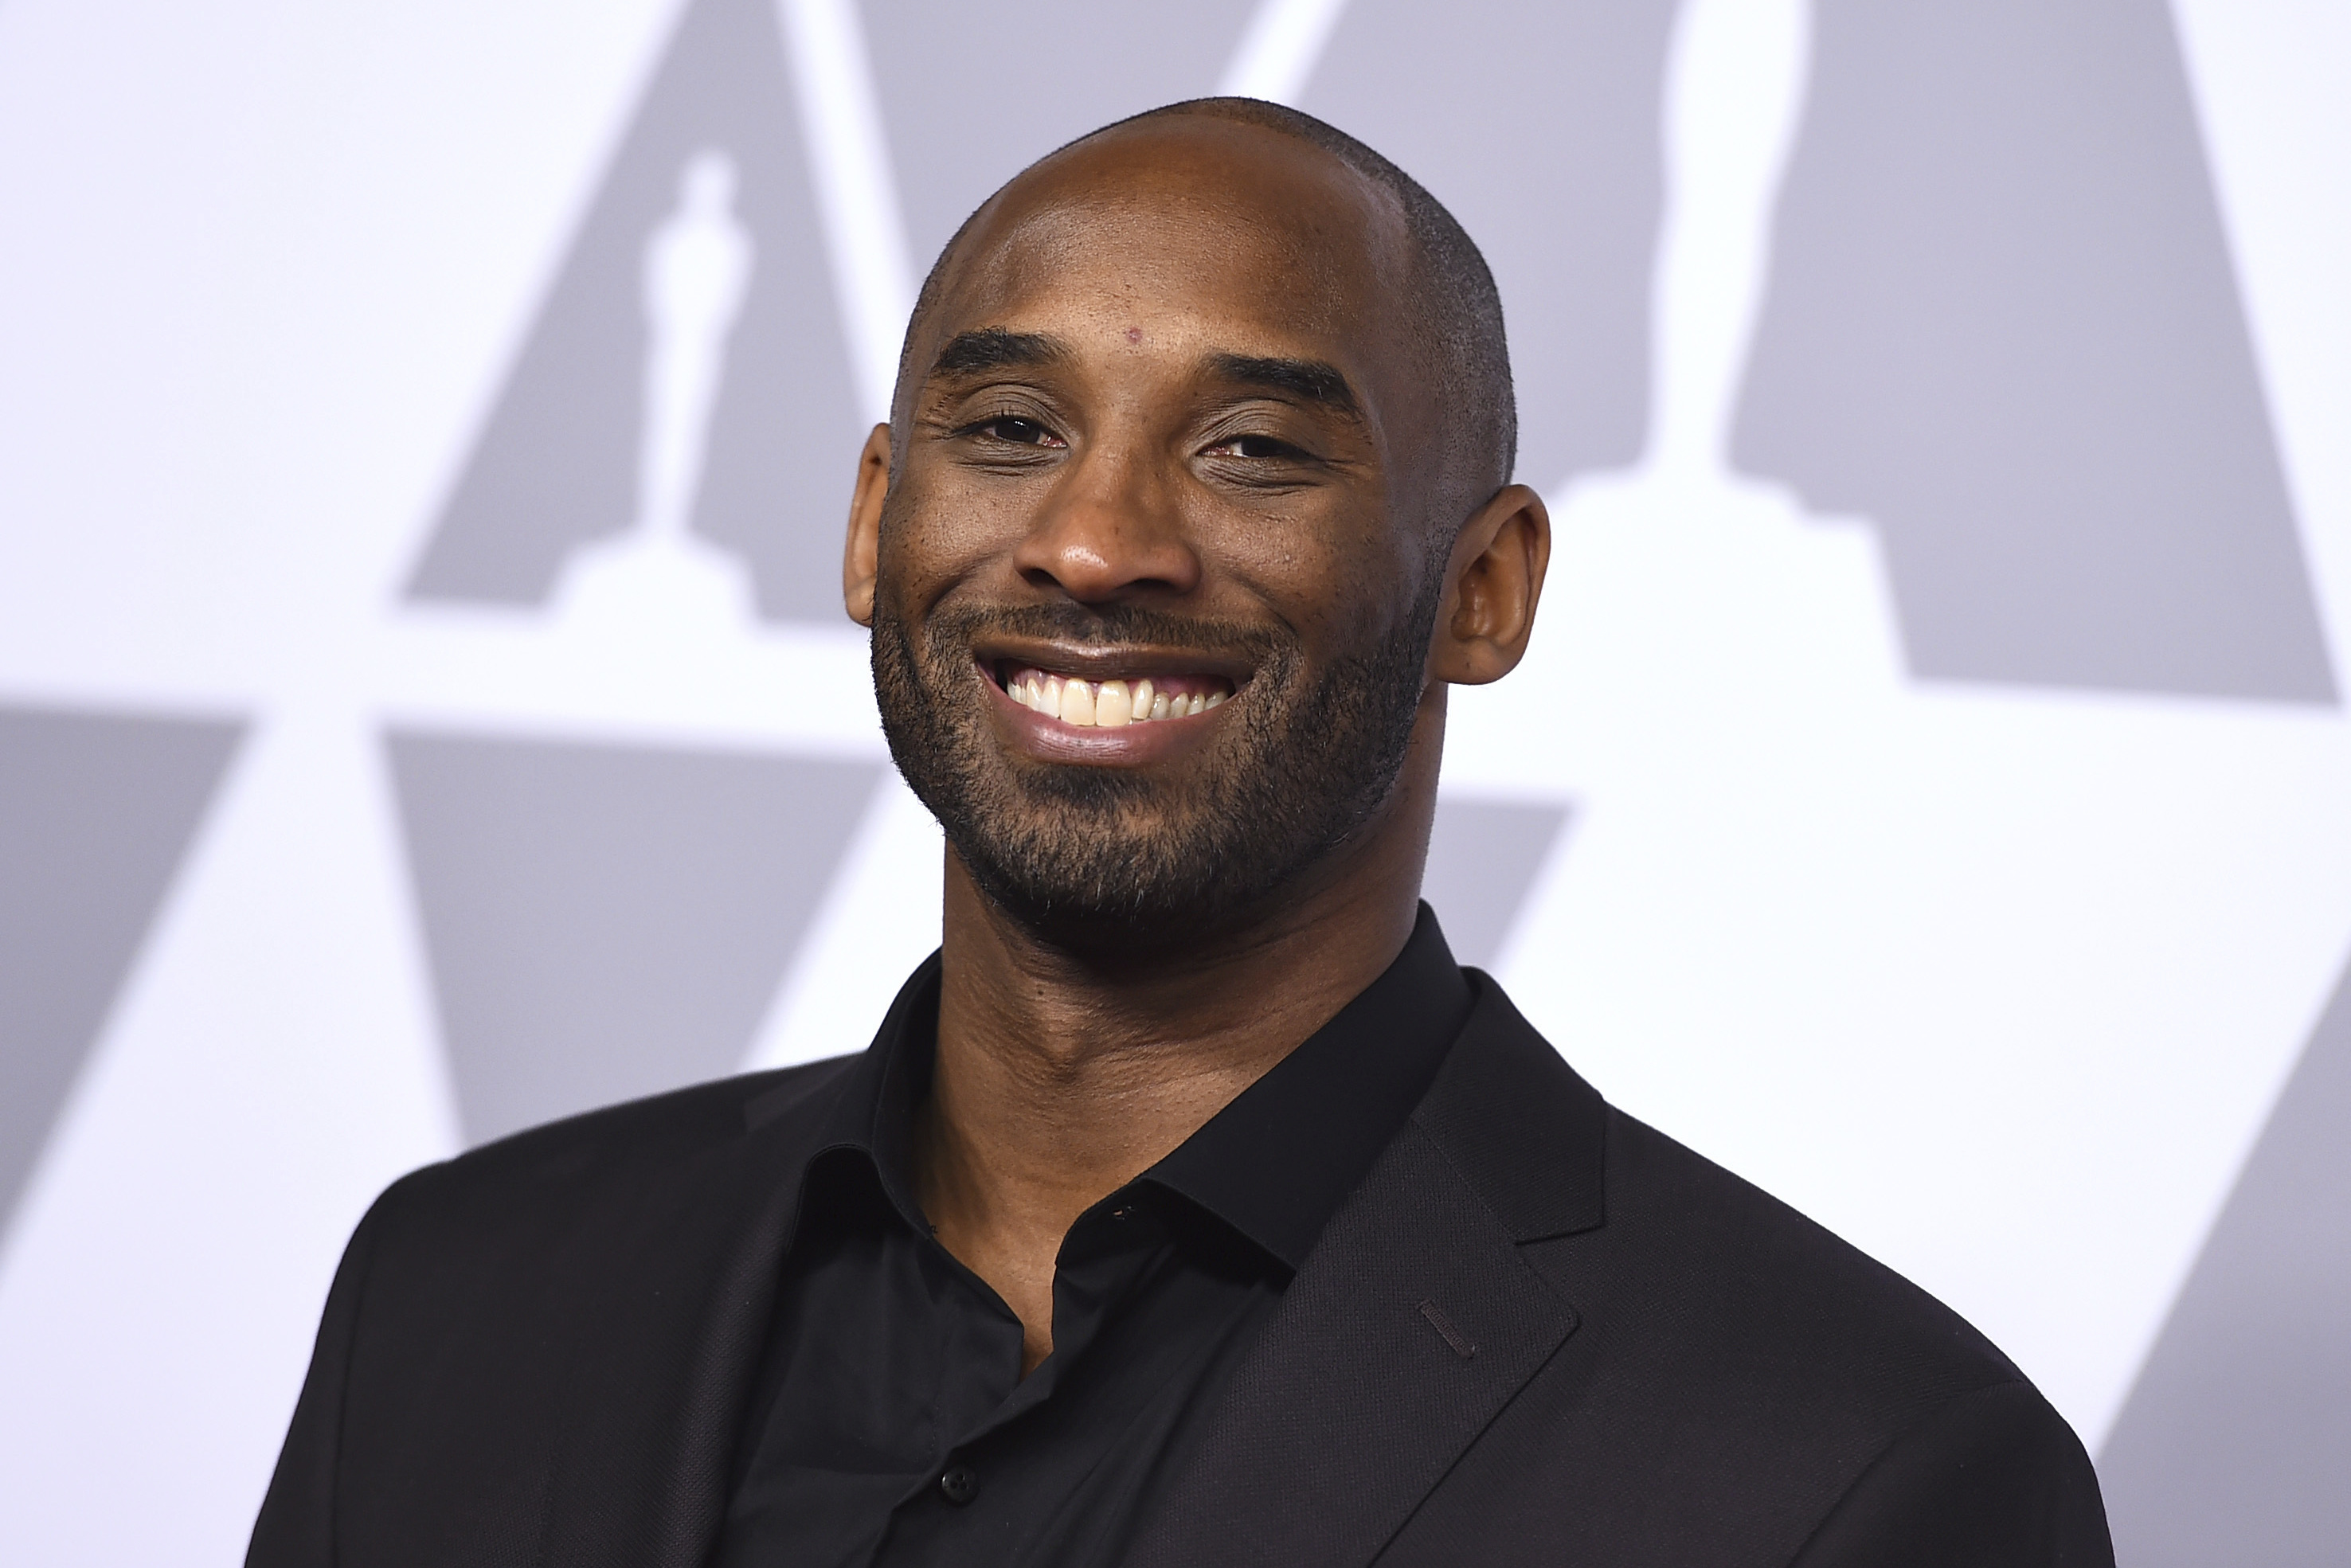 Kobe's stolen high school jersey is returned - ESPN